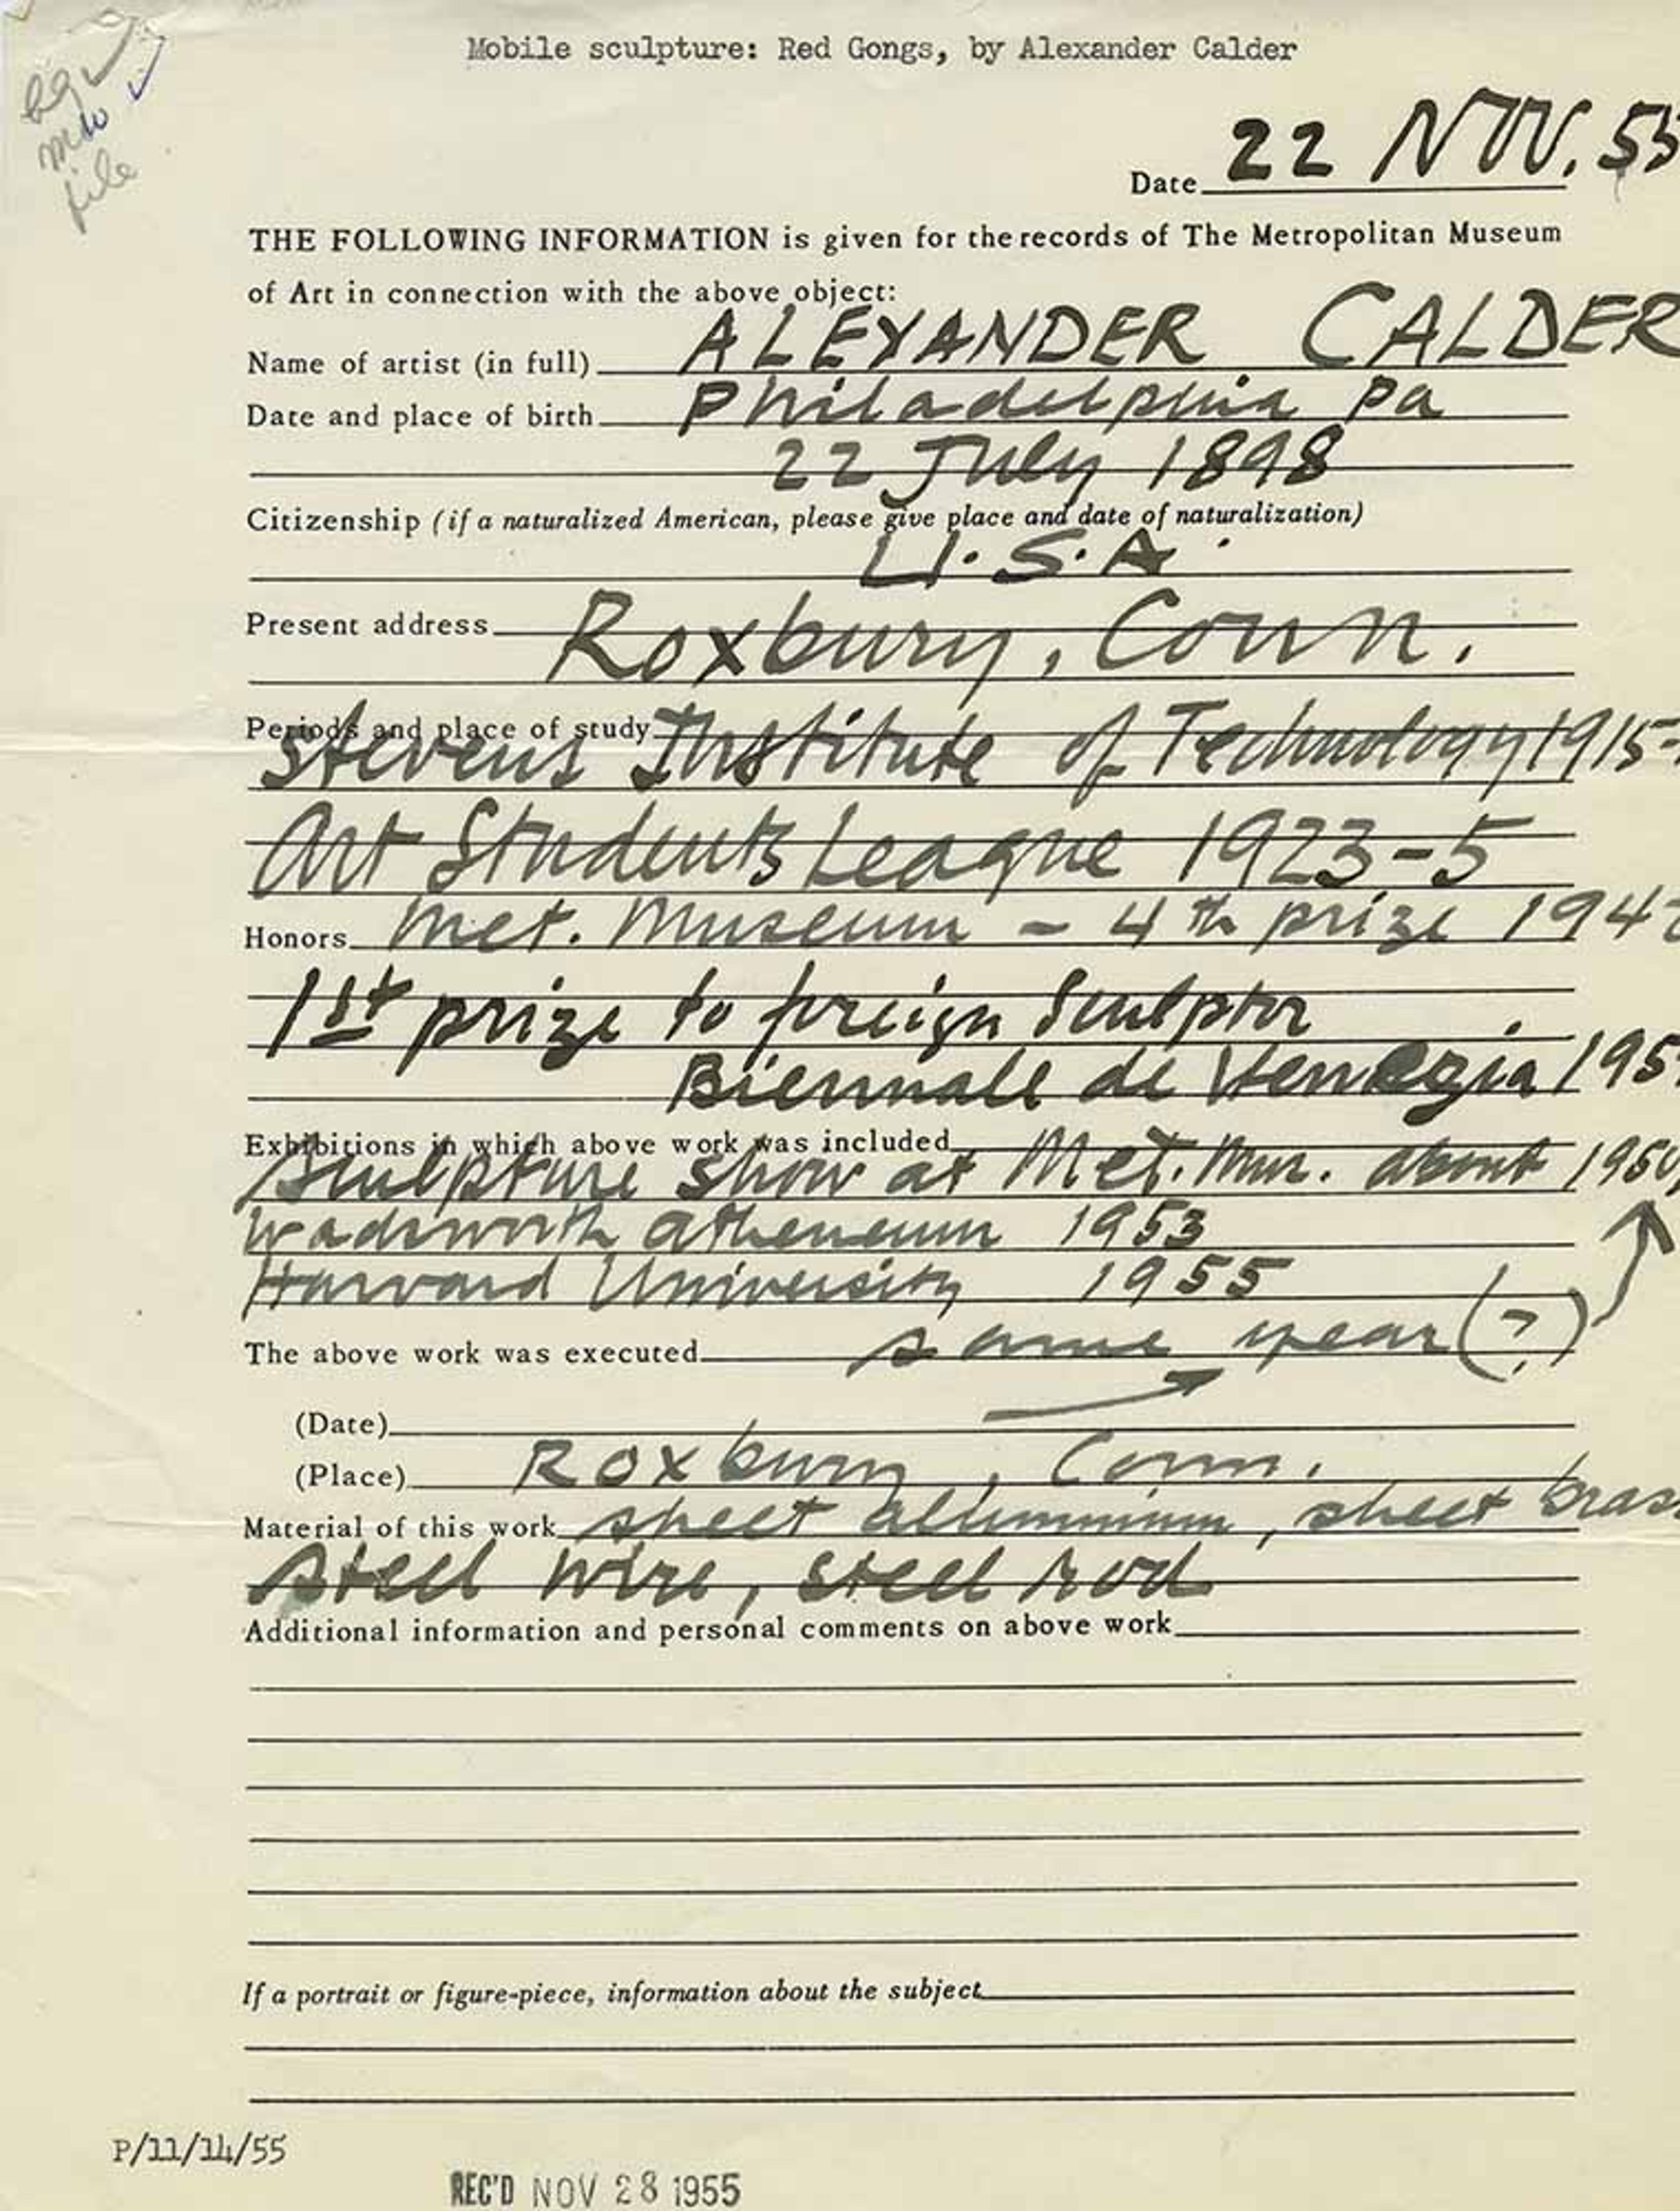 An intake form filled out by artist Alexander Calder